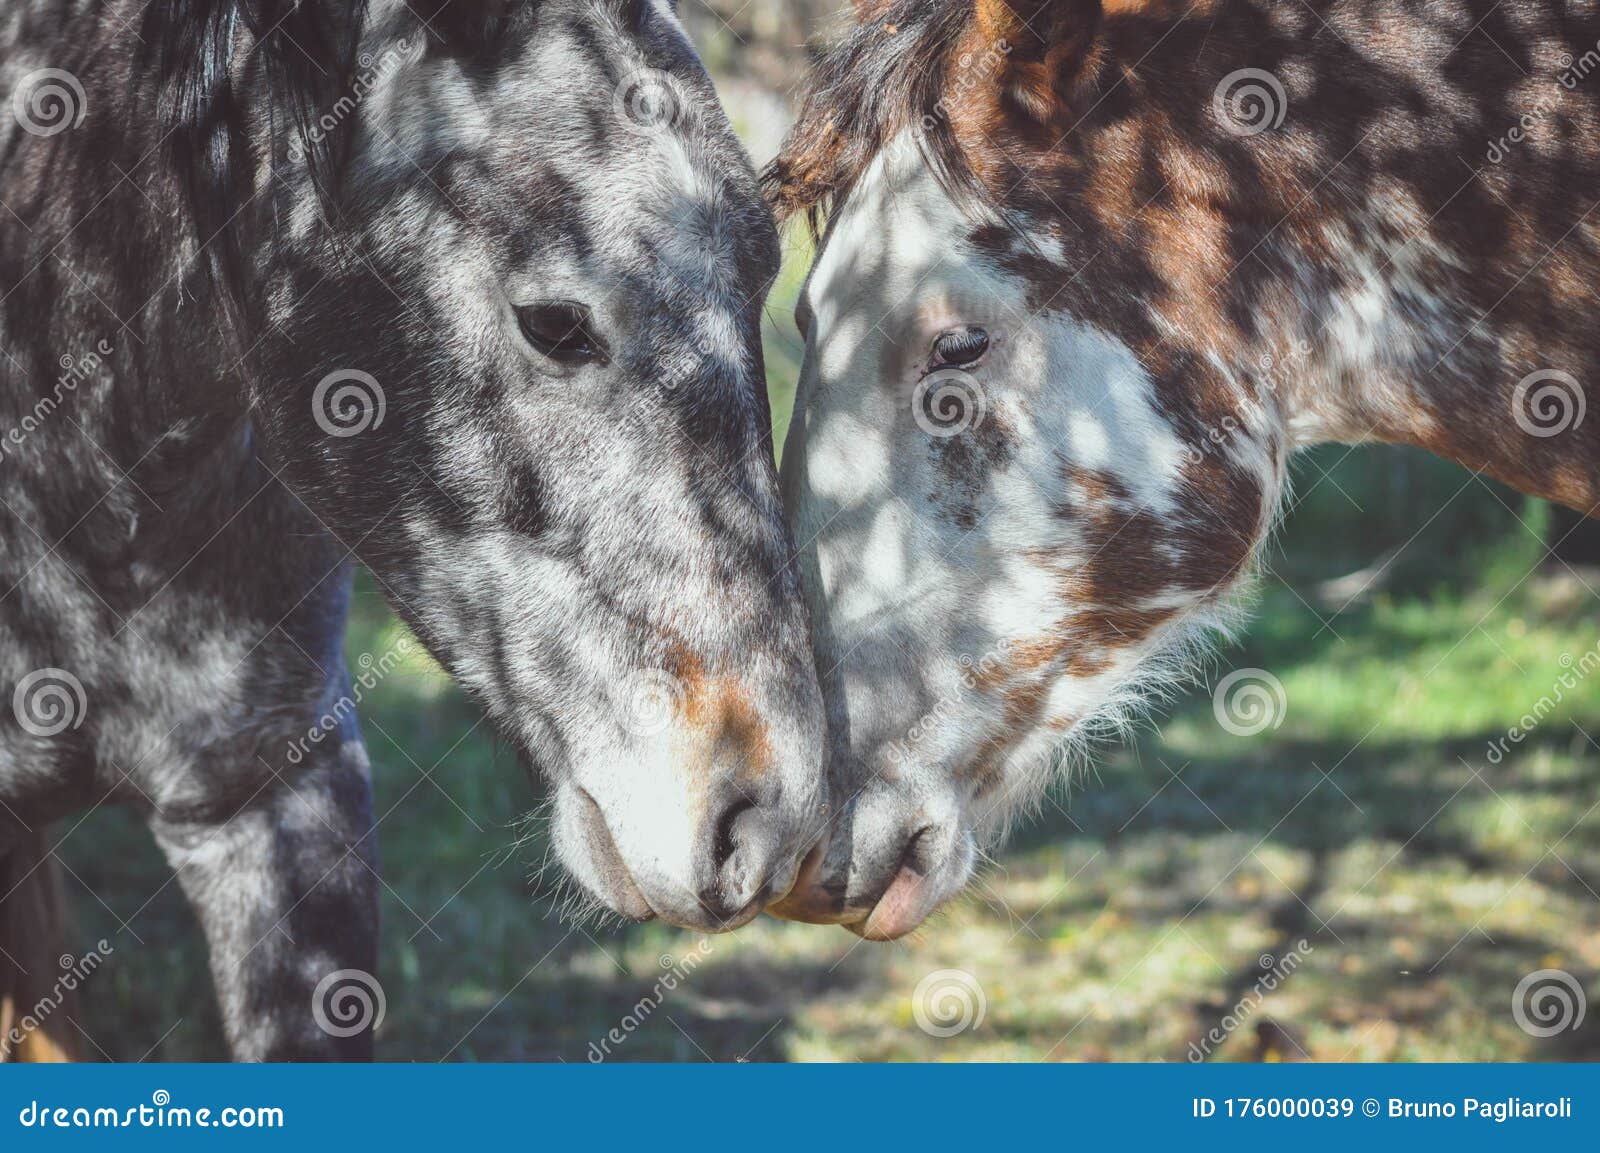 animals in love